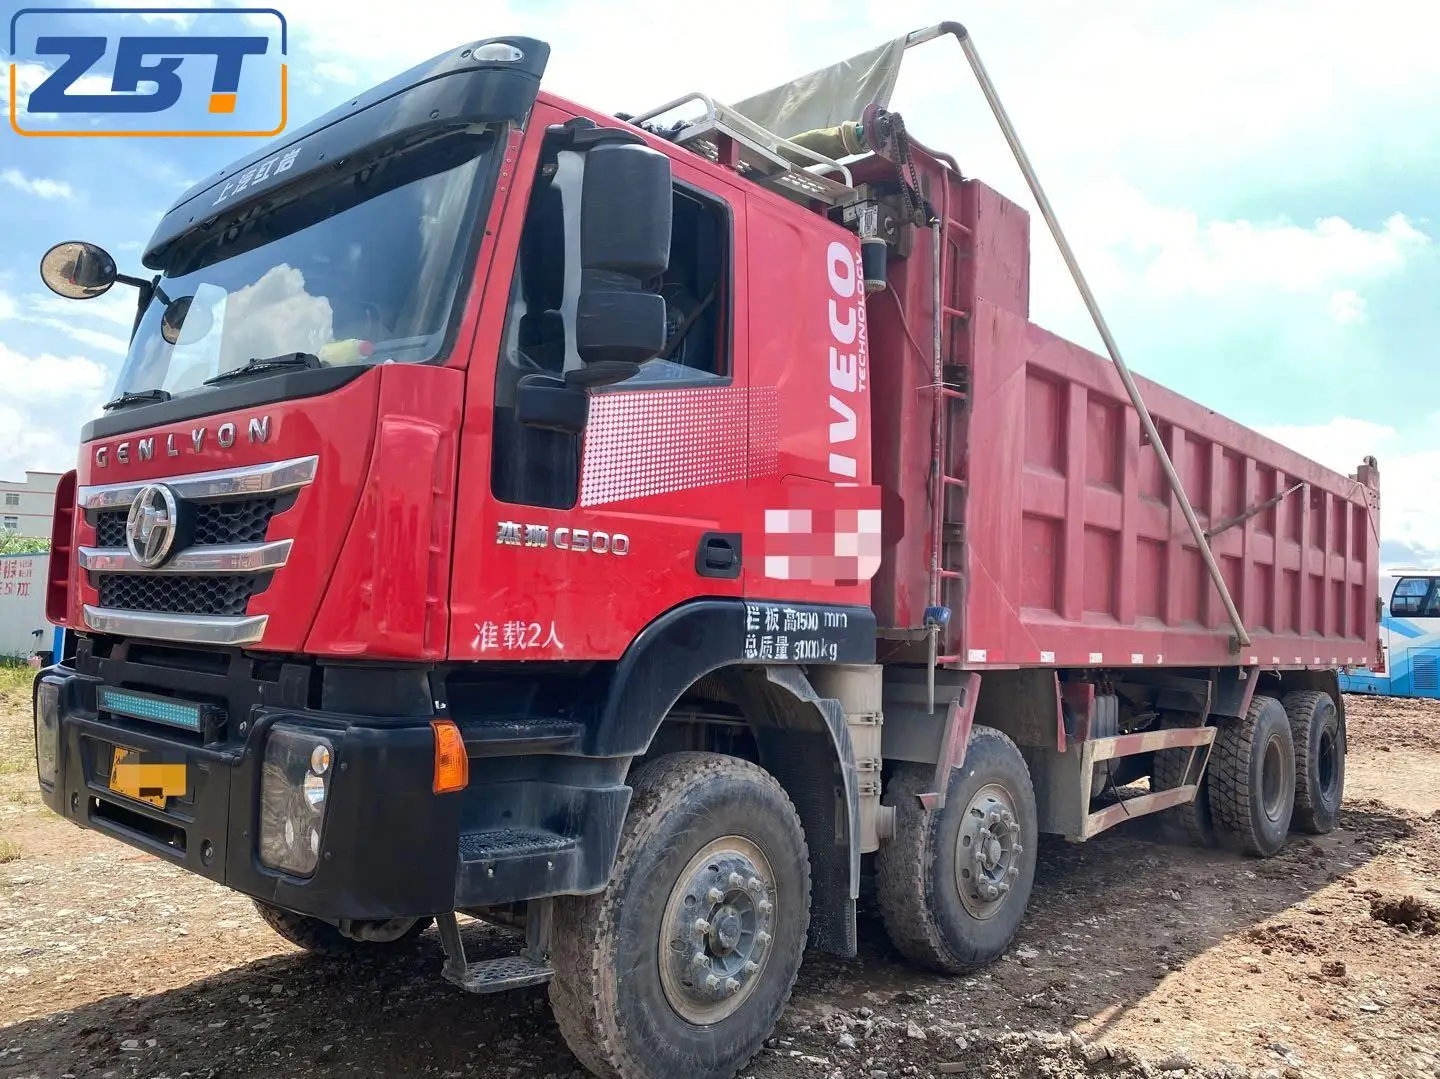 
good job 15 ton Iveco Saic hongyan genlyon heavy duty site dumpper trucks 8X4 12 wheels dump truck for sale 